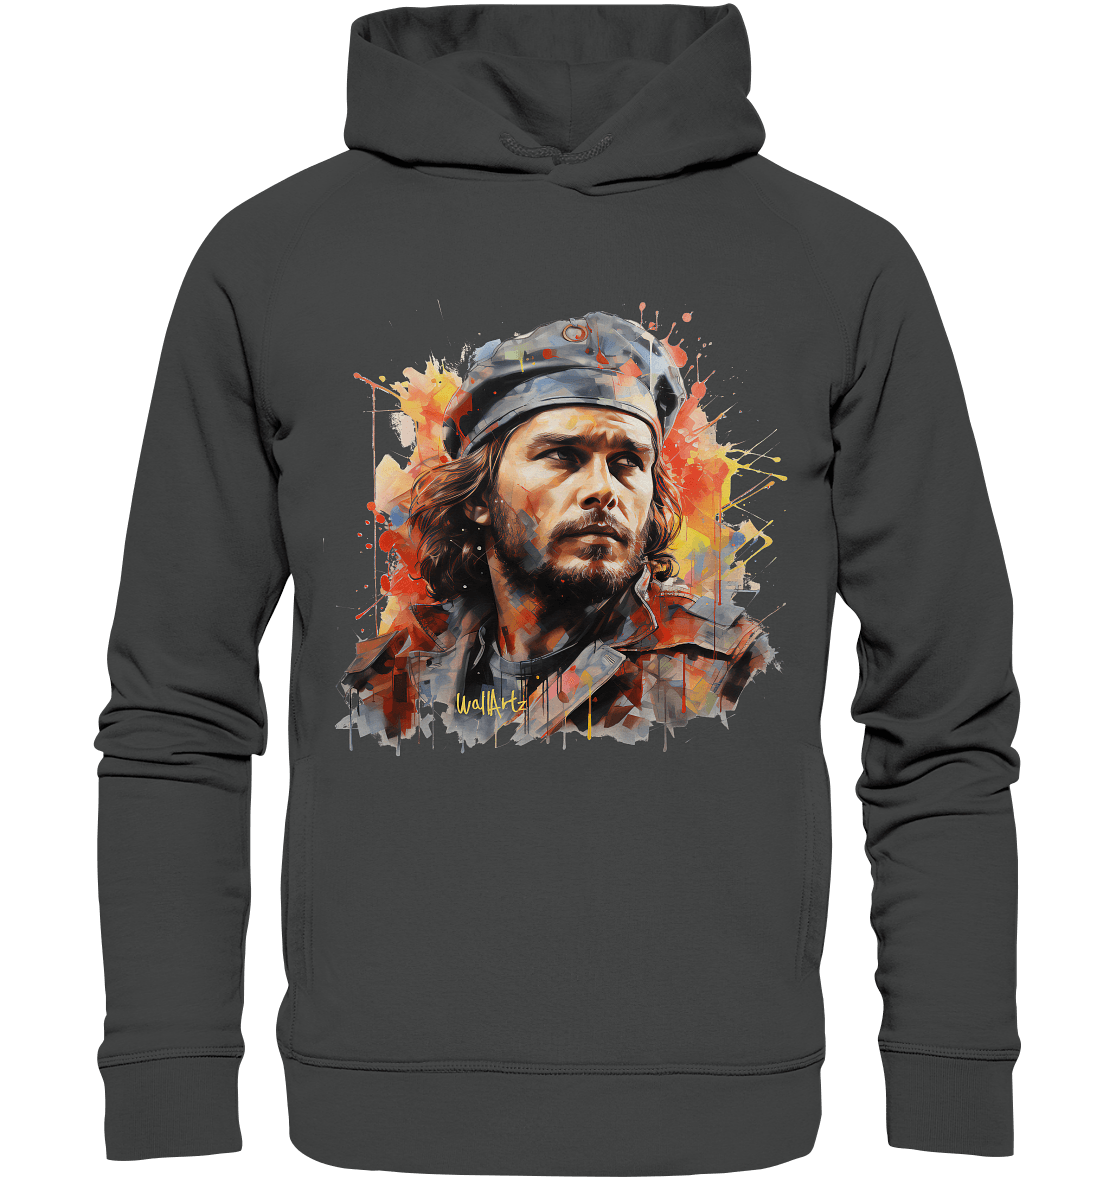 WallArt - Ernesto "Che" Guevara - Organic Fashion Hoodie - Snapshirts